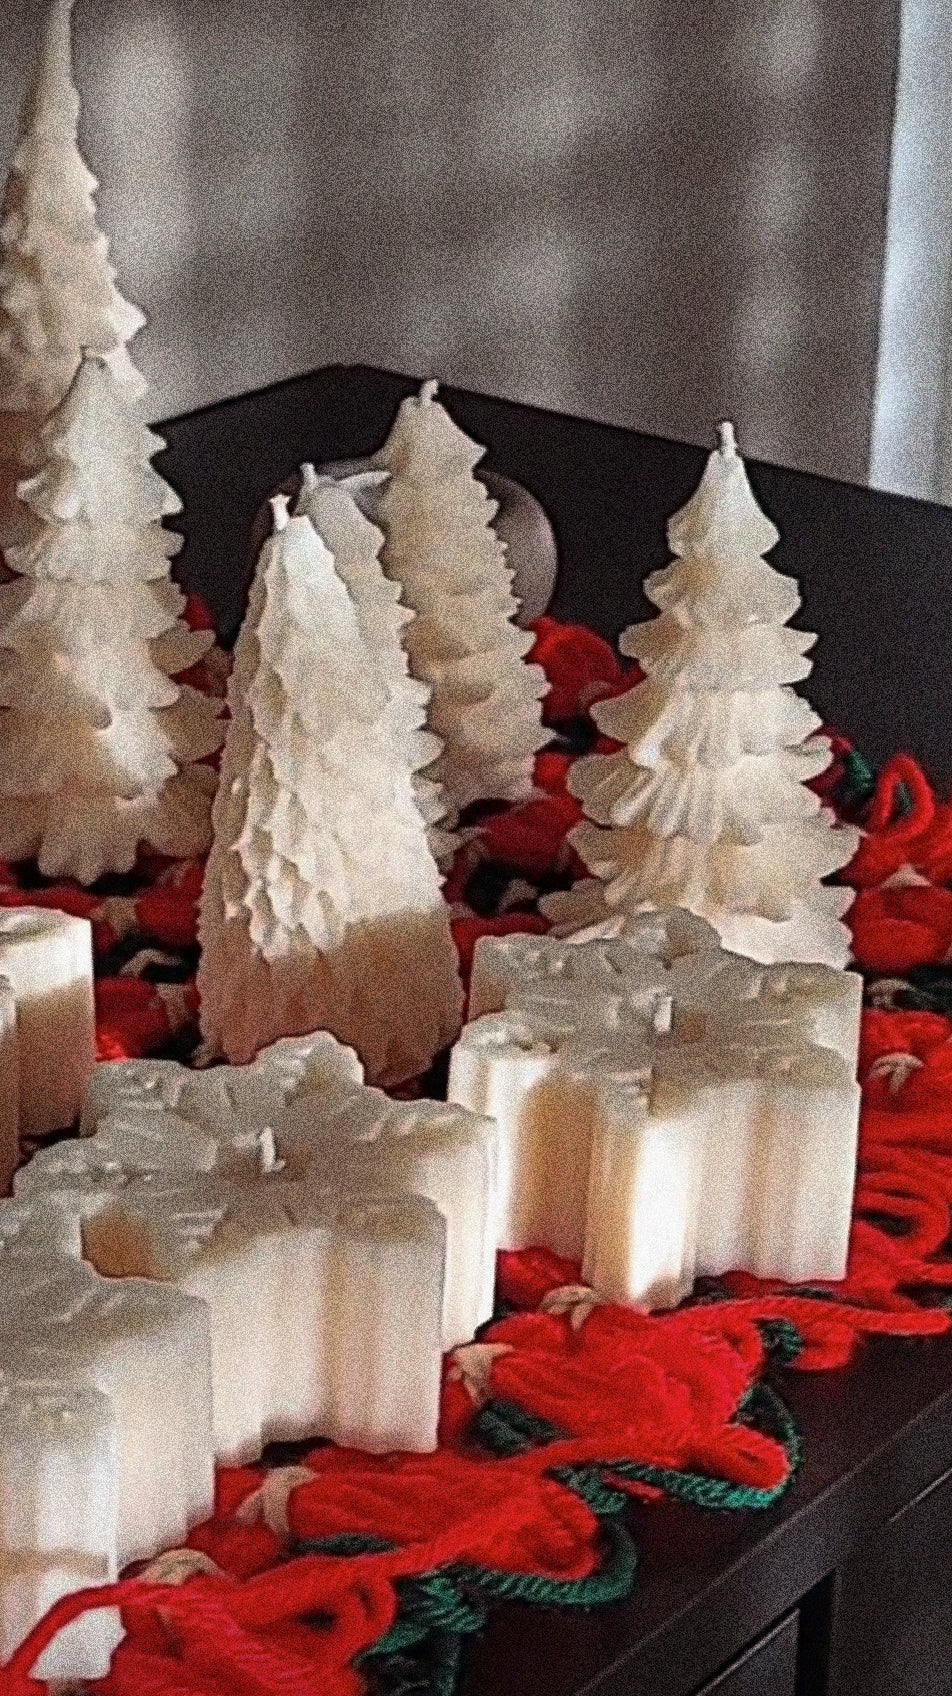 "Christmas Pine" Candle Collection